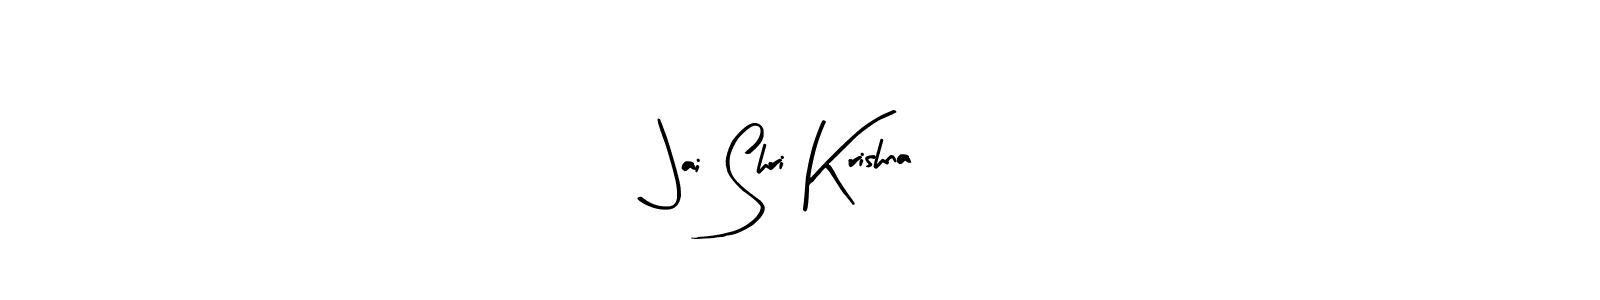 How to make Jai Shri Krishna signature? Arty Signature is a professional autograph style. Create handwritten signature for Jai Shri Krishna name. Jai Shri Krishna signature style 8 images and pictures png